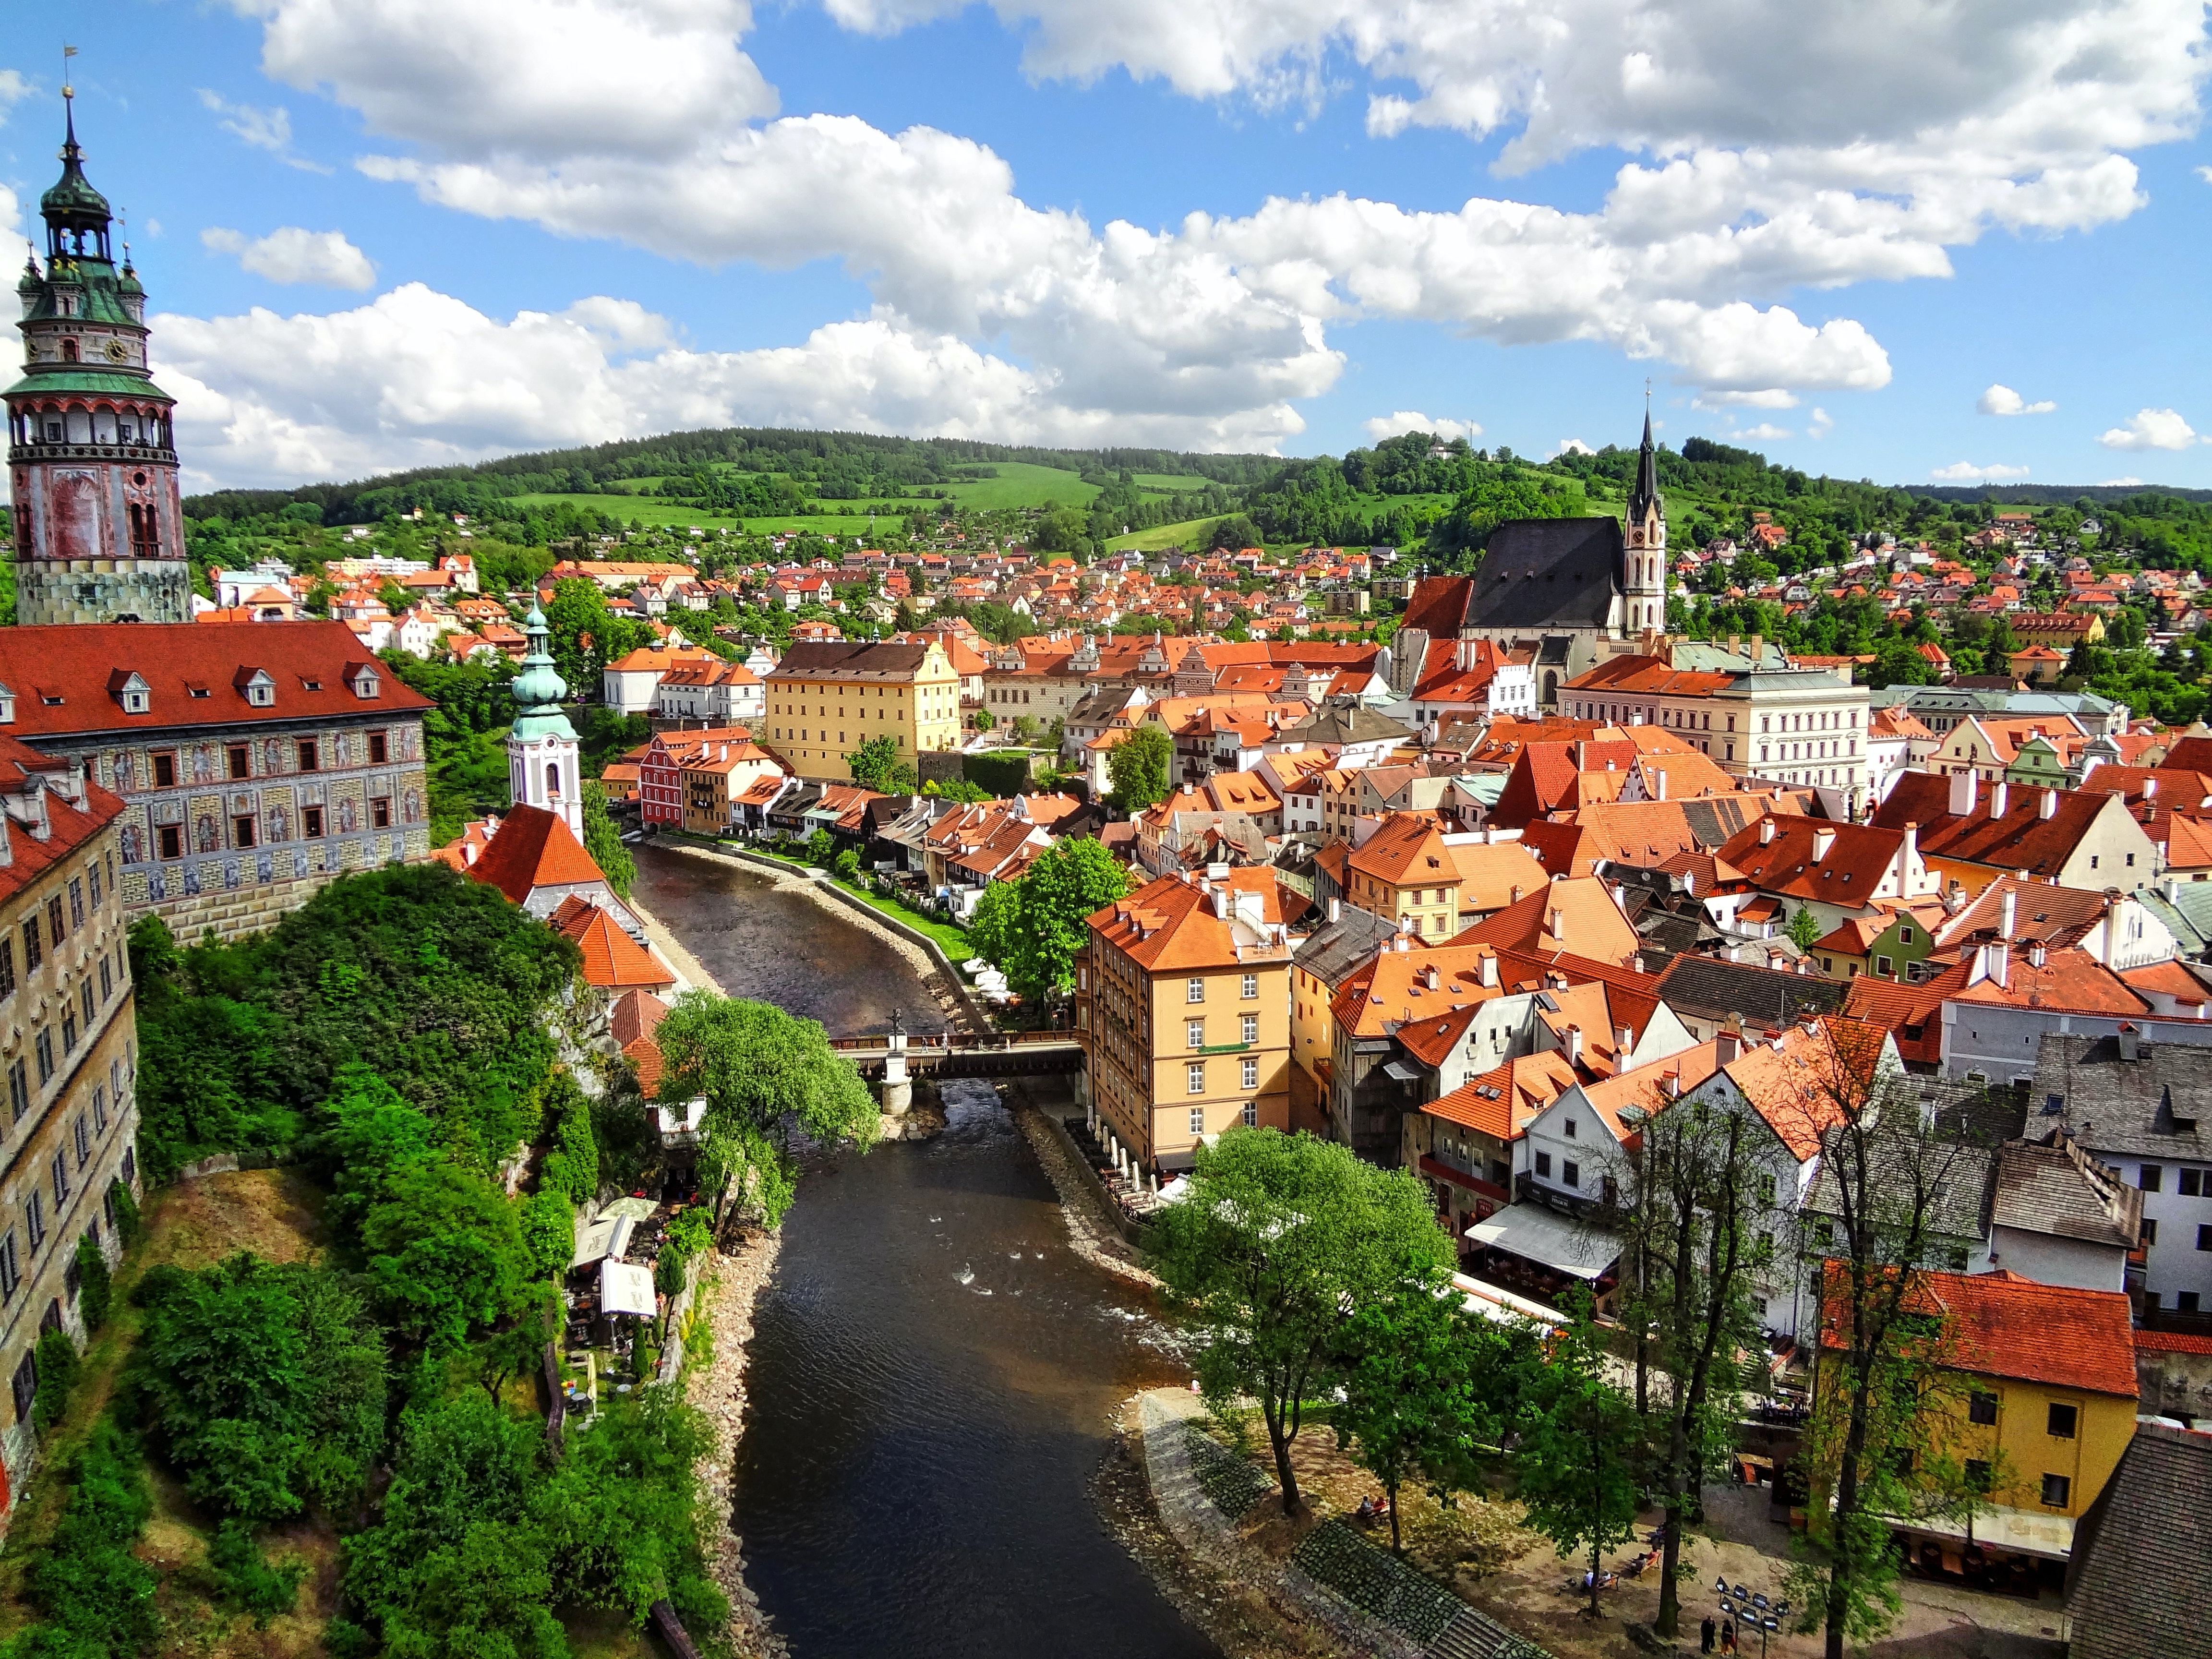 tourhub | Global Dream Travel | Central Europe Classical Romance Journey - Prague, Salzburg and Venice | CEU1